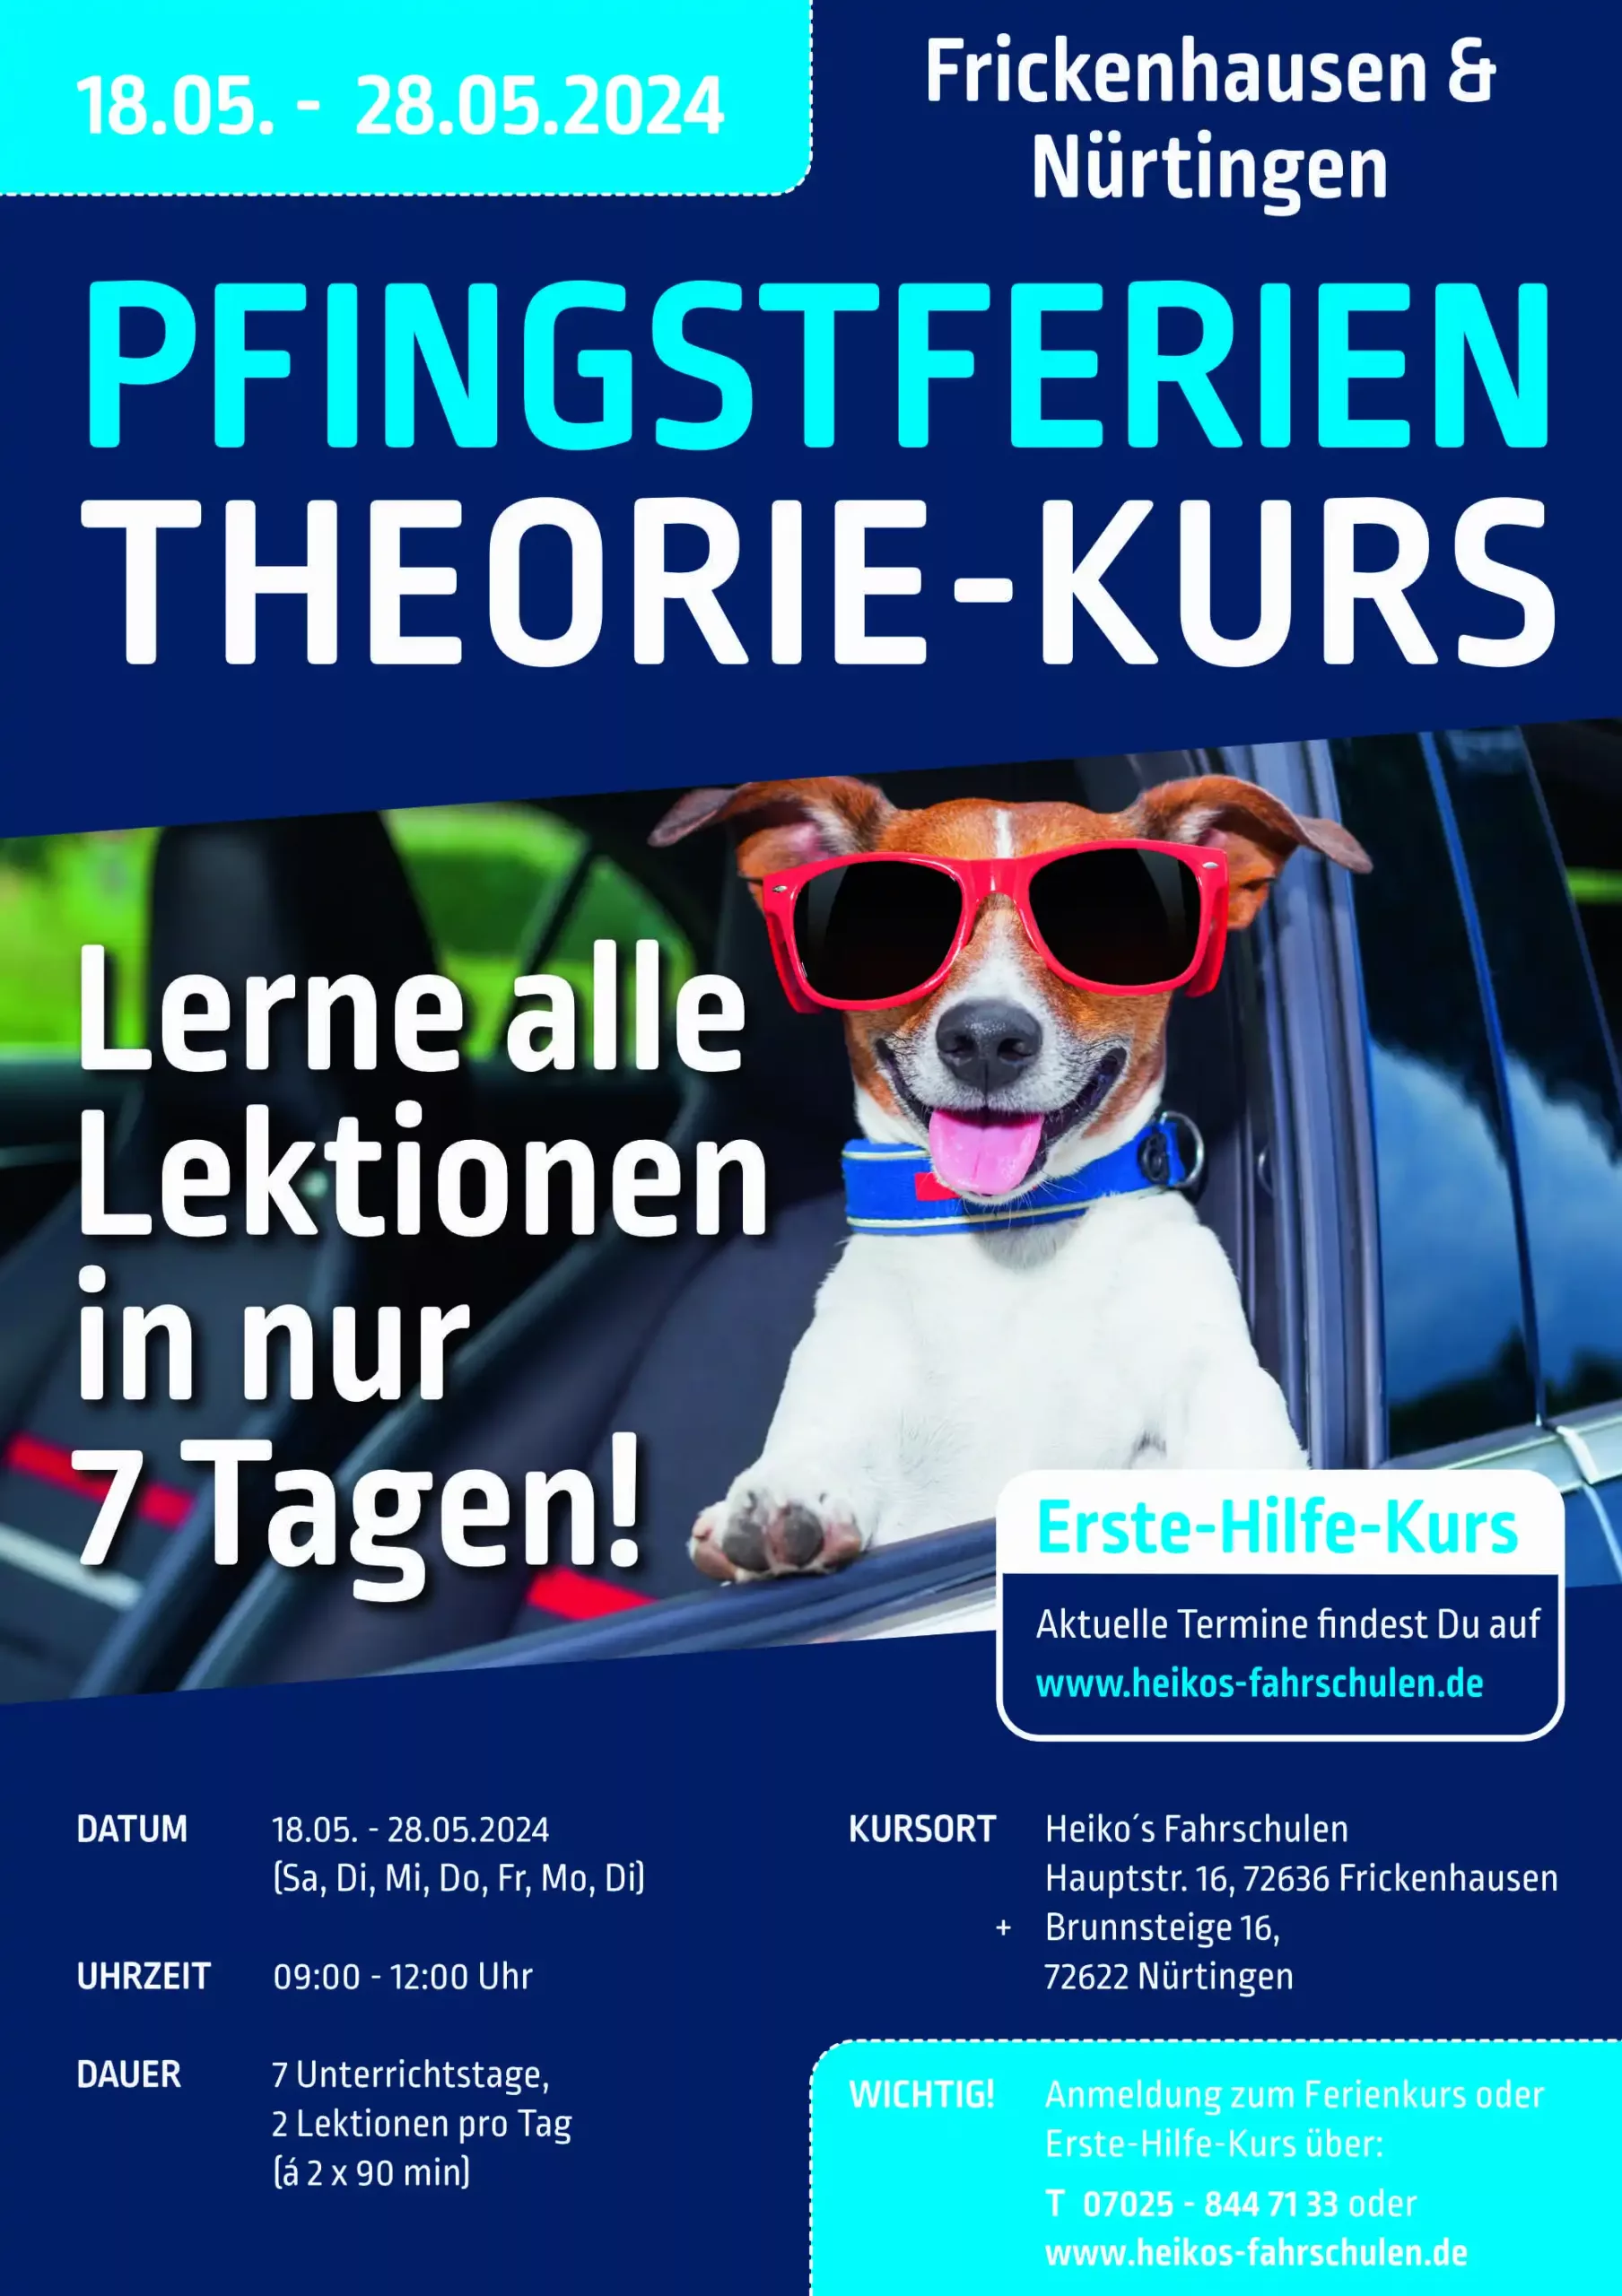 pfingstferienkurs frickenhausen 2024-theorie kurs-heikos fahrschule-pfingstferienkurs nürtingen